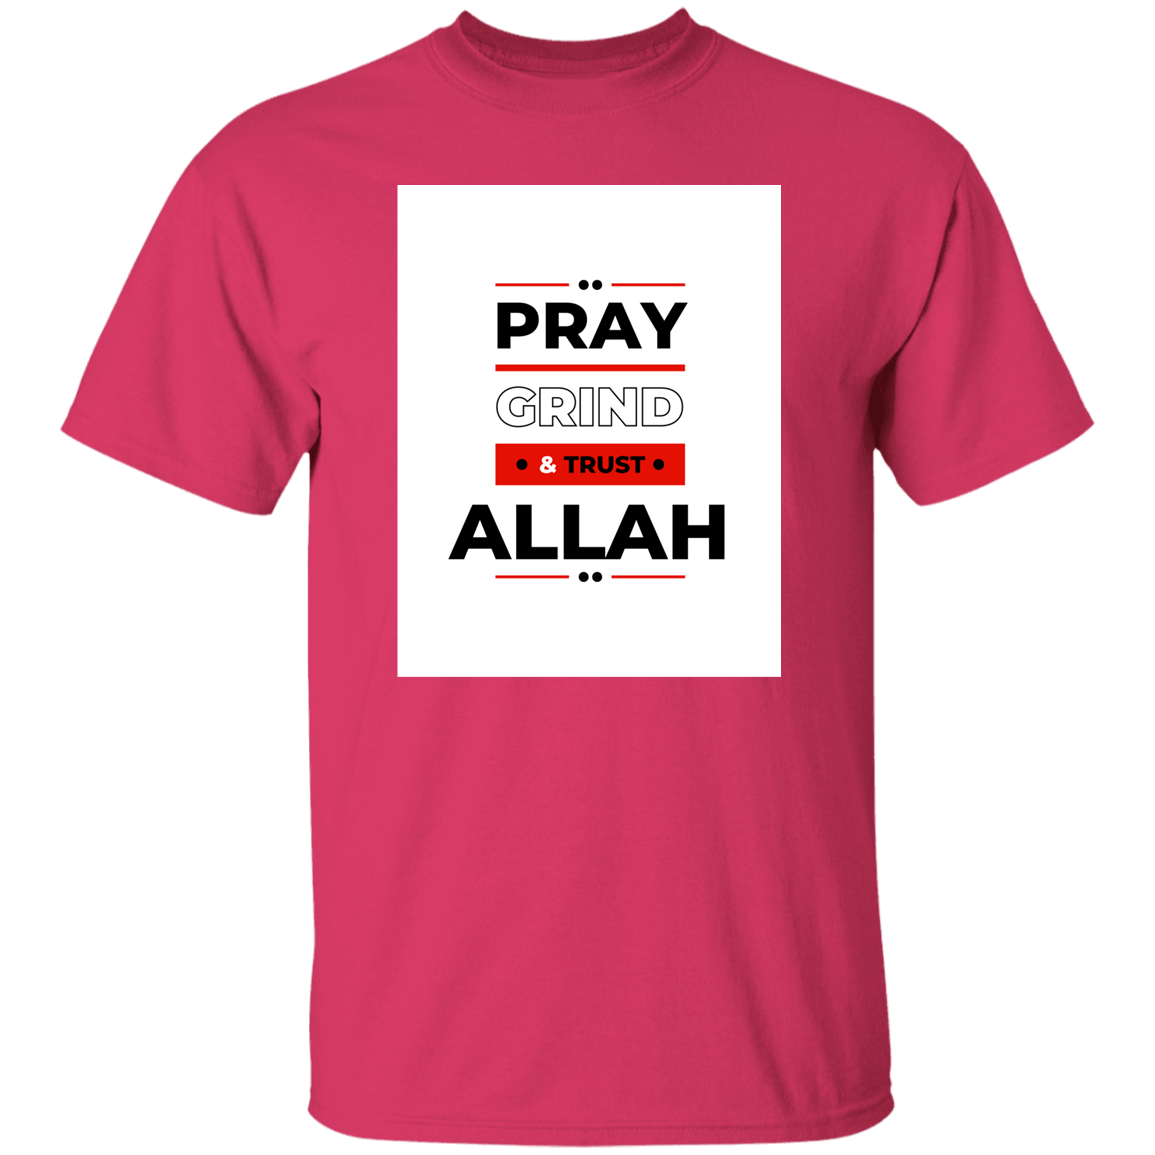 PRAY, GRIND & TRUST ALLAH  T-Shirt (MORE COLOR OPTIONS)